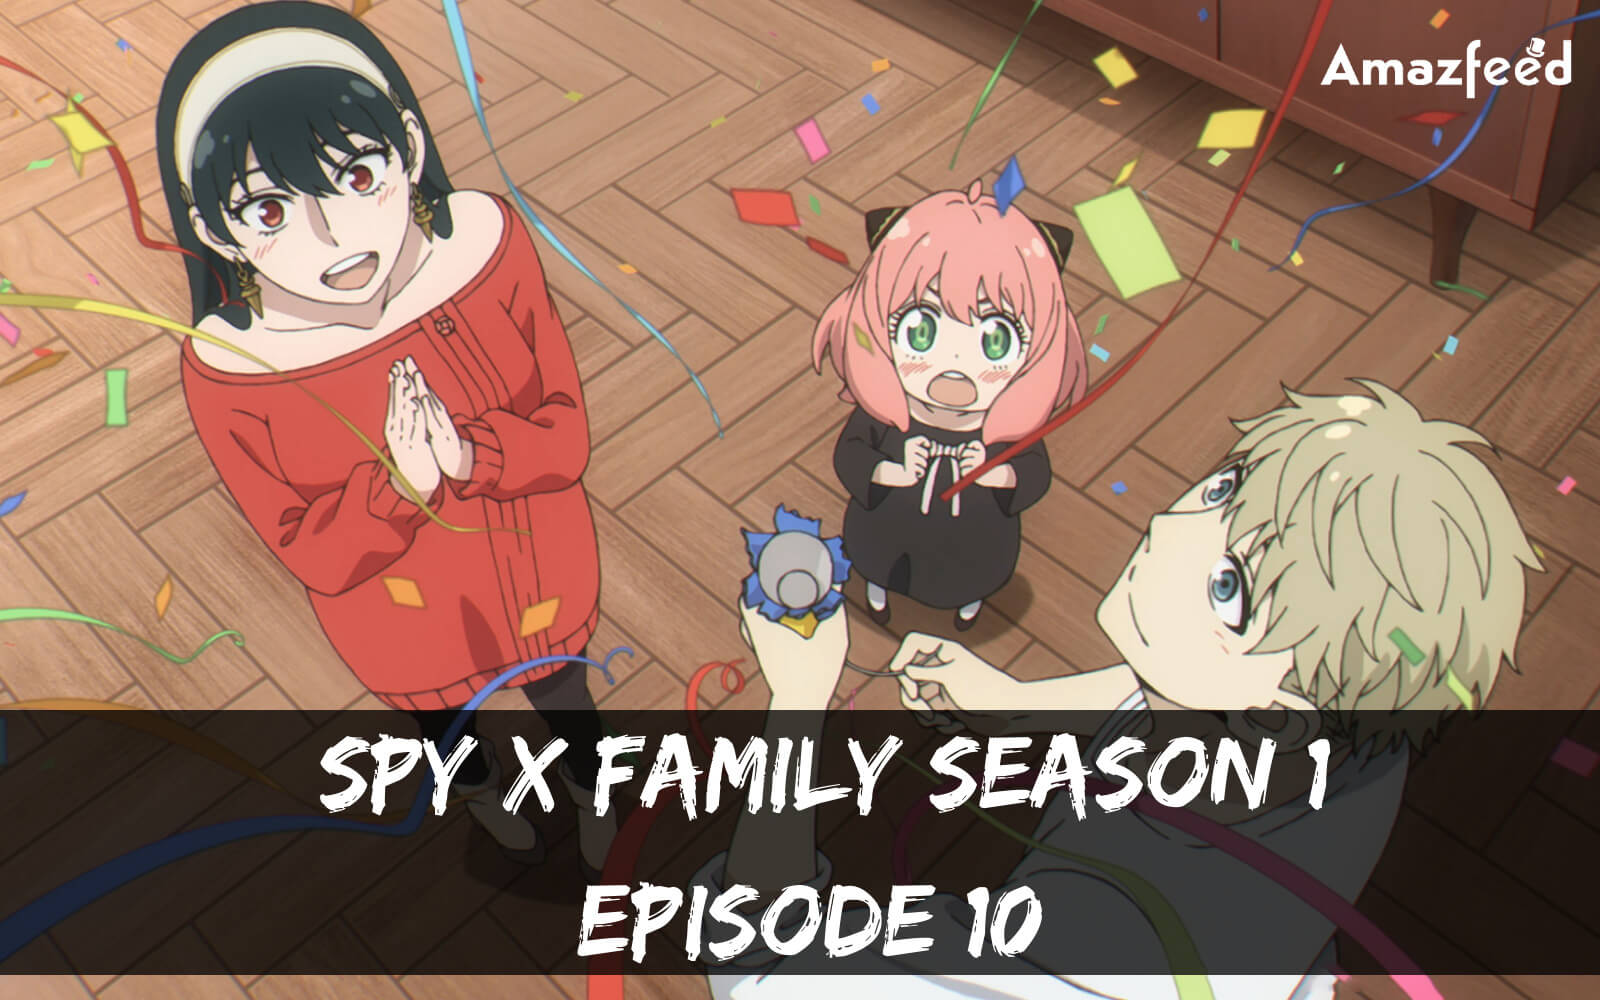 Spy x Family Season 1 Episode 10 release date